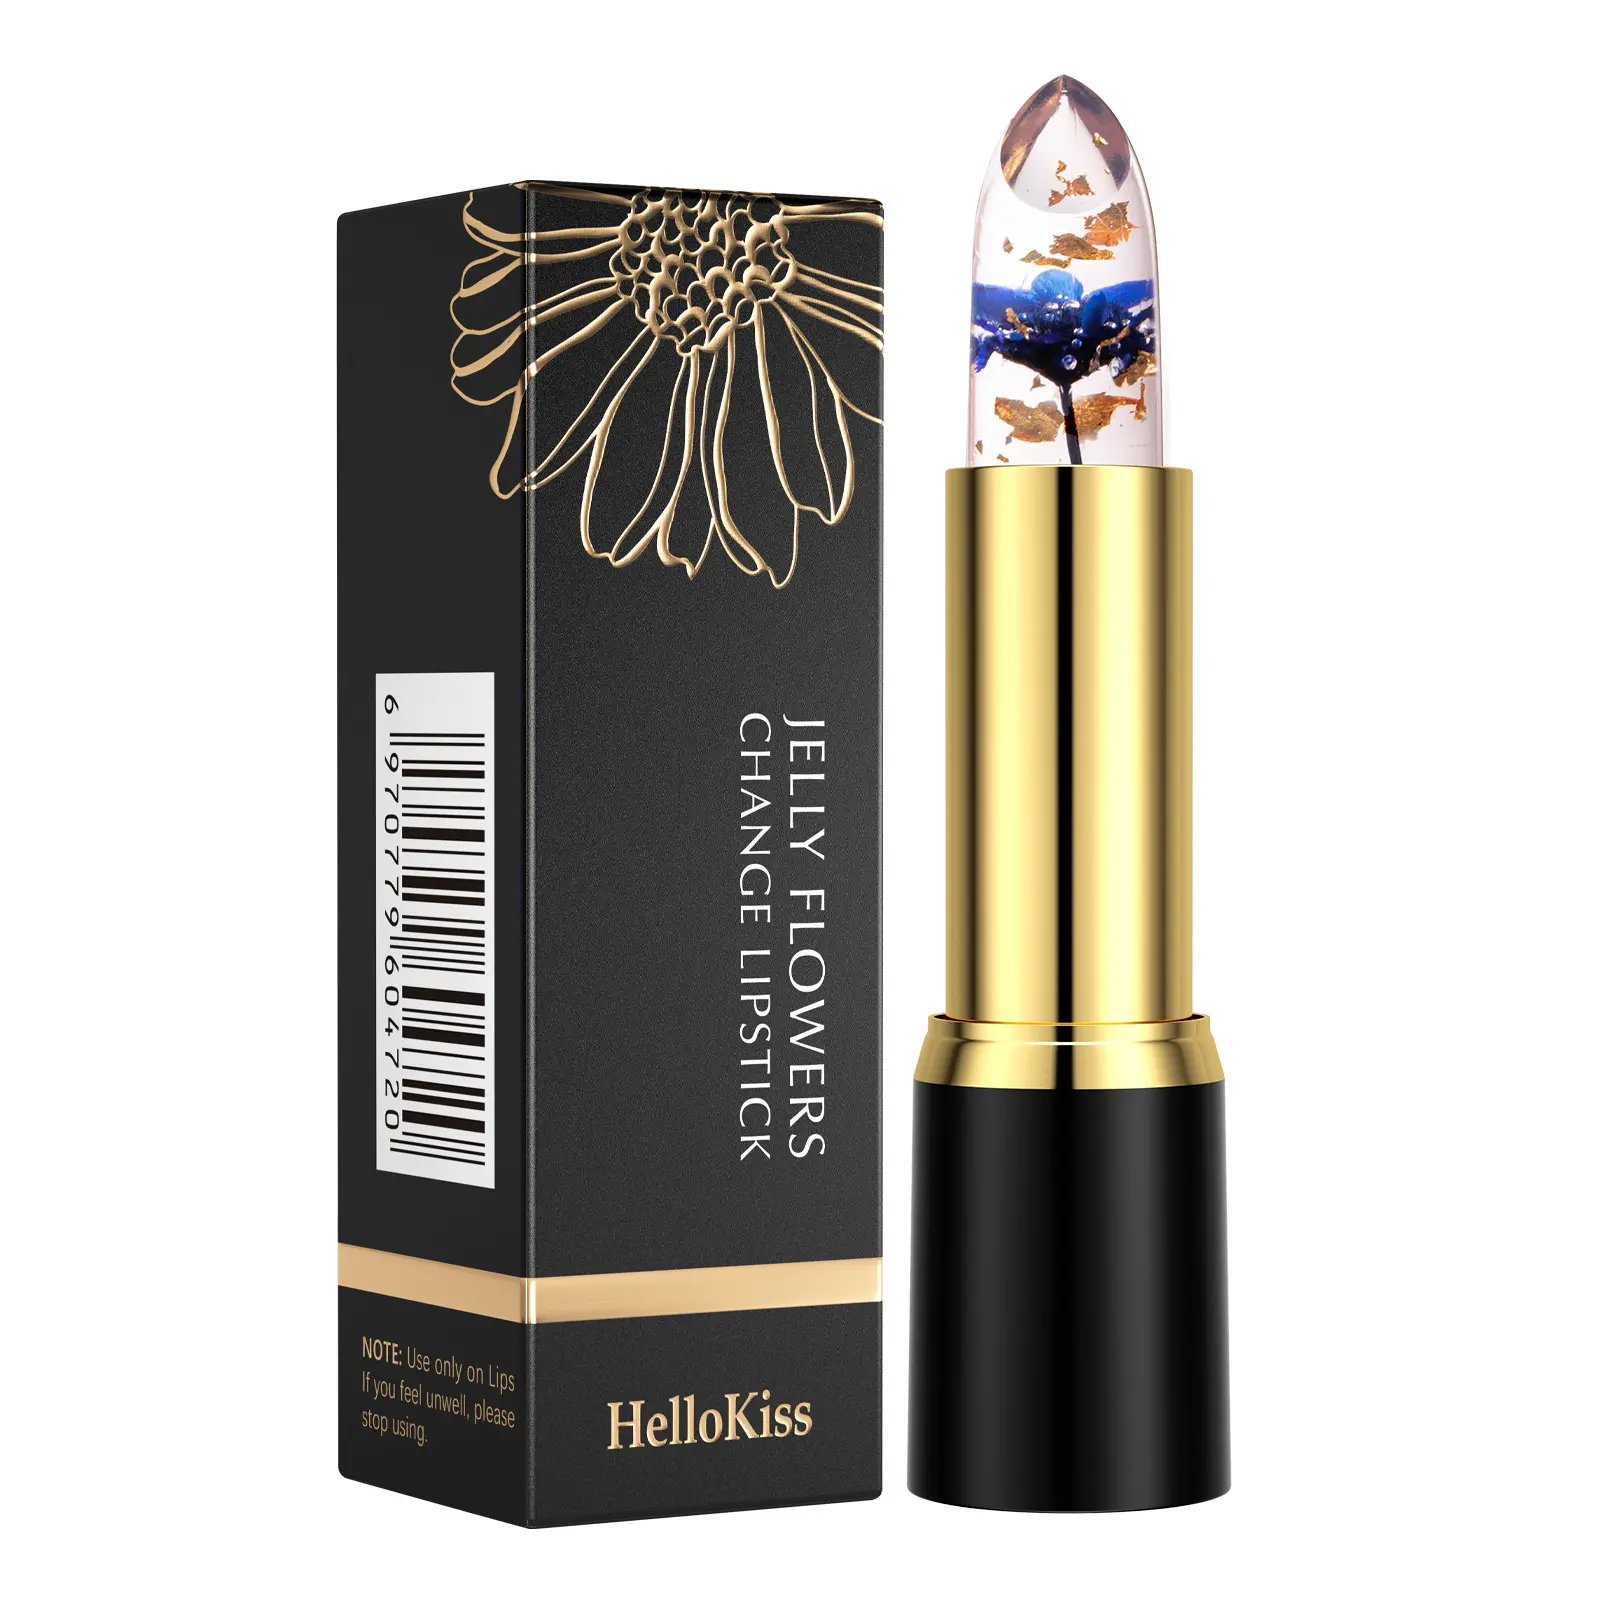 Holesale lower inferior agic Lipstick Ange hange ololor oioisturizing Color hanging colgante ipstick